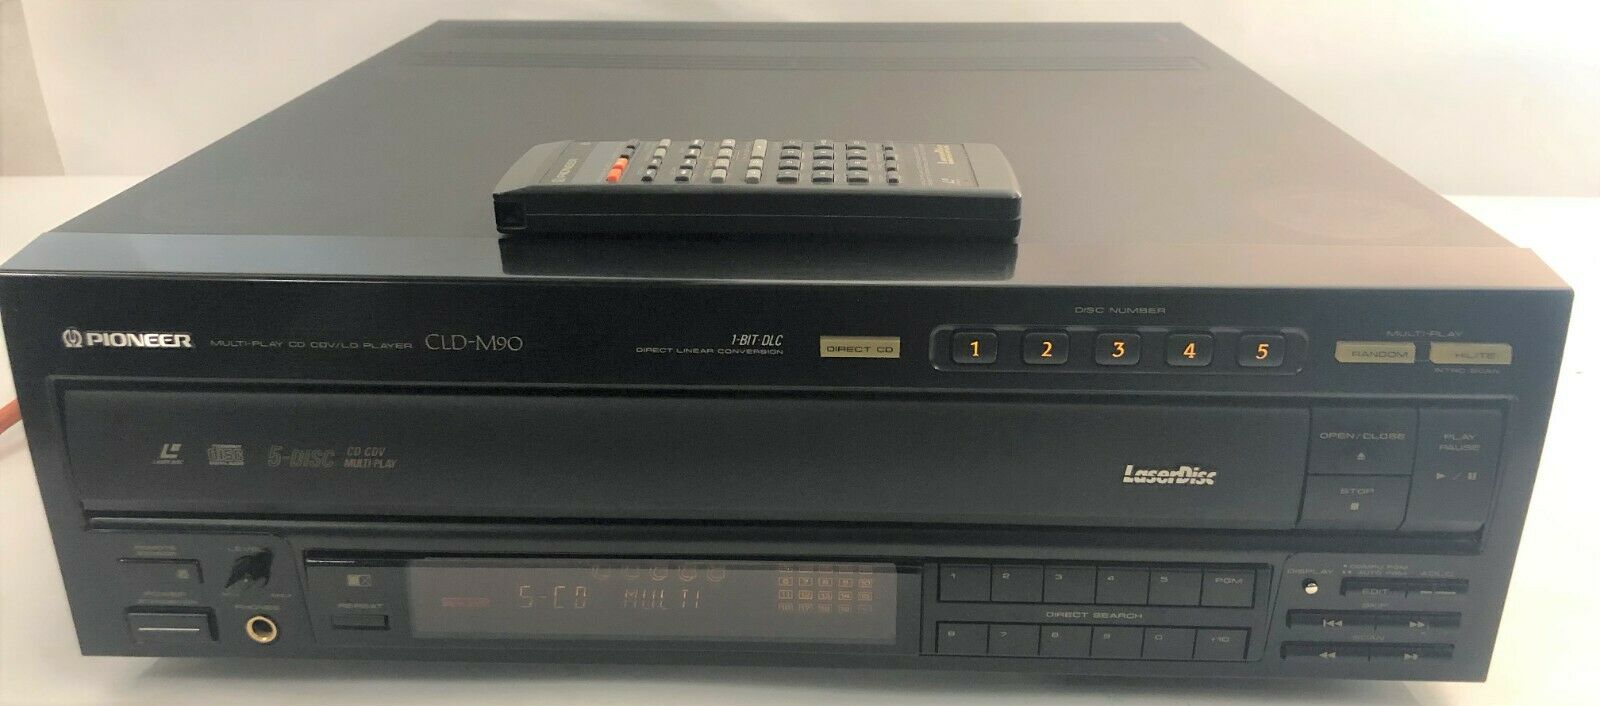 Pioneer Cld-m90 Laserdisc Multi-play 5 Cd Cdv/ld Player + Remote